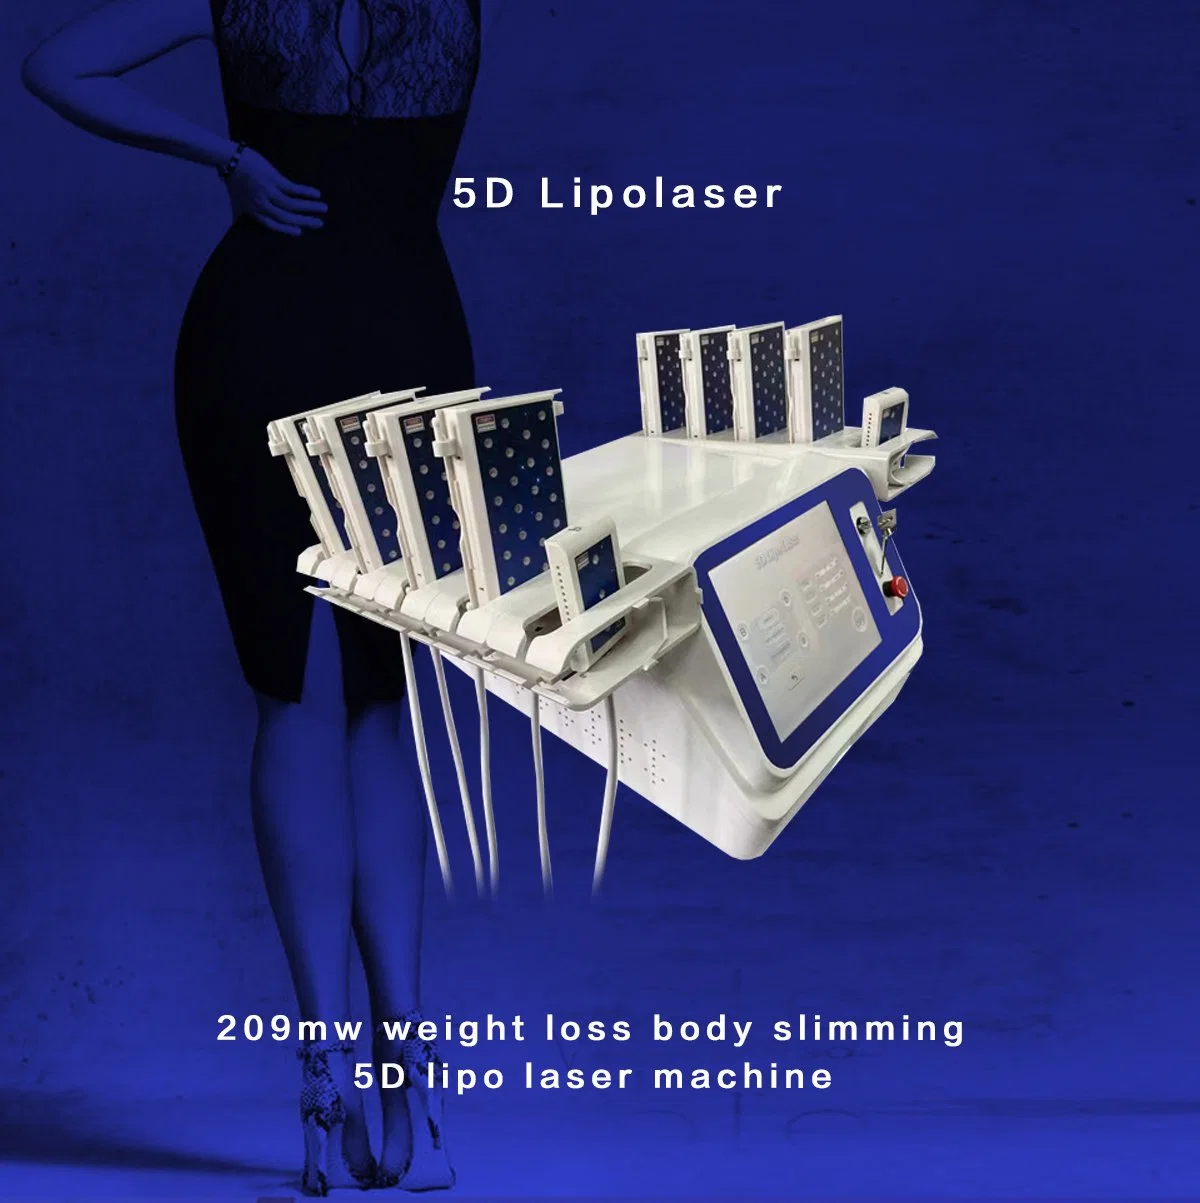 Die Effektivste Cellulite-Reduktion Rotlicht Lipo Laser Body Contouring Fat Reduction 5D Laser Lipo Weight Loss Slimming Maschine Lipolaser